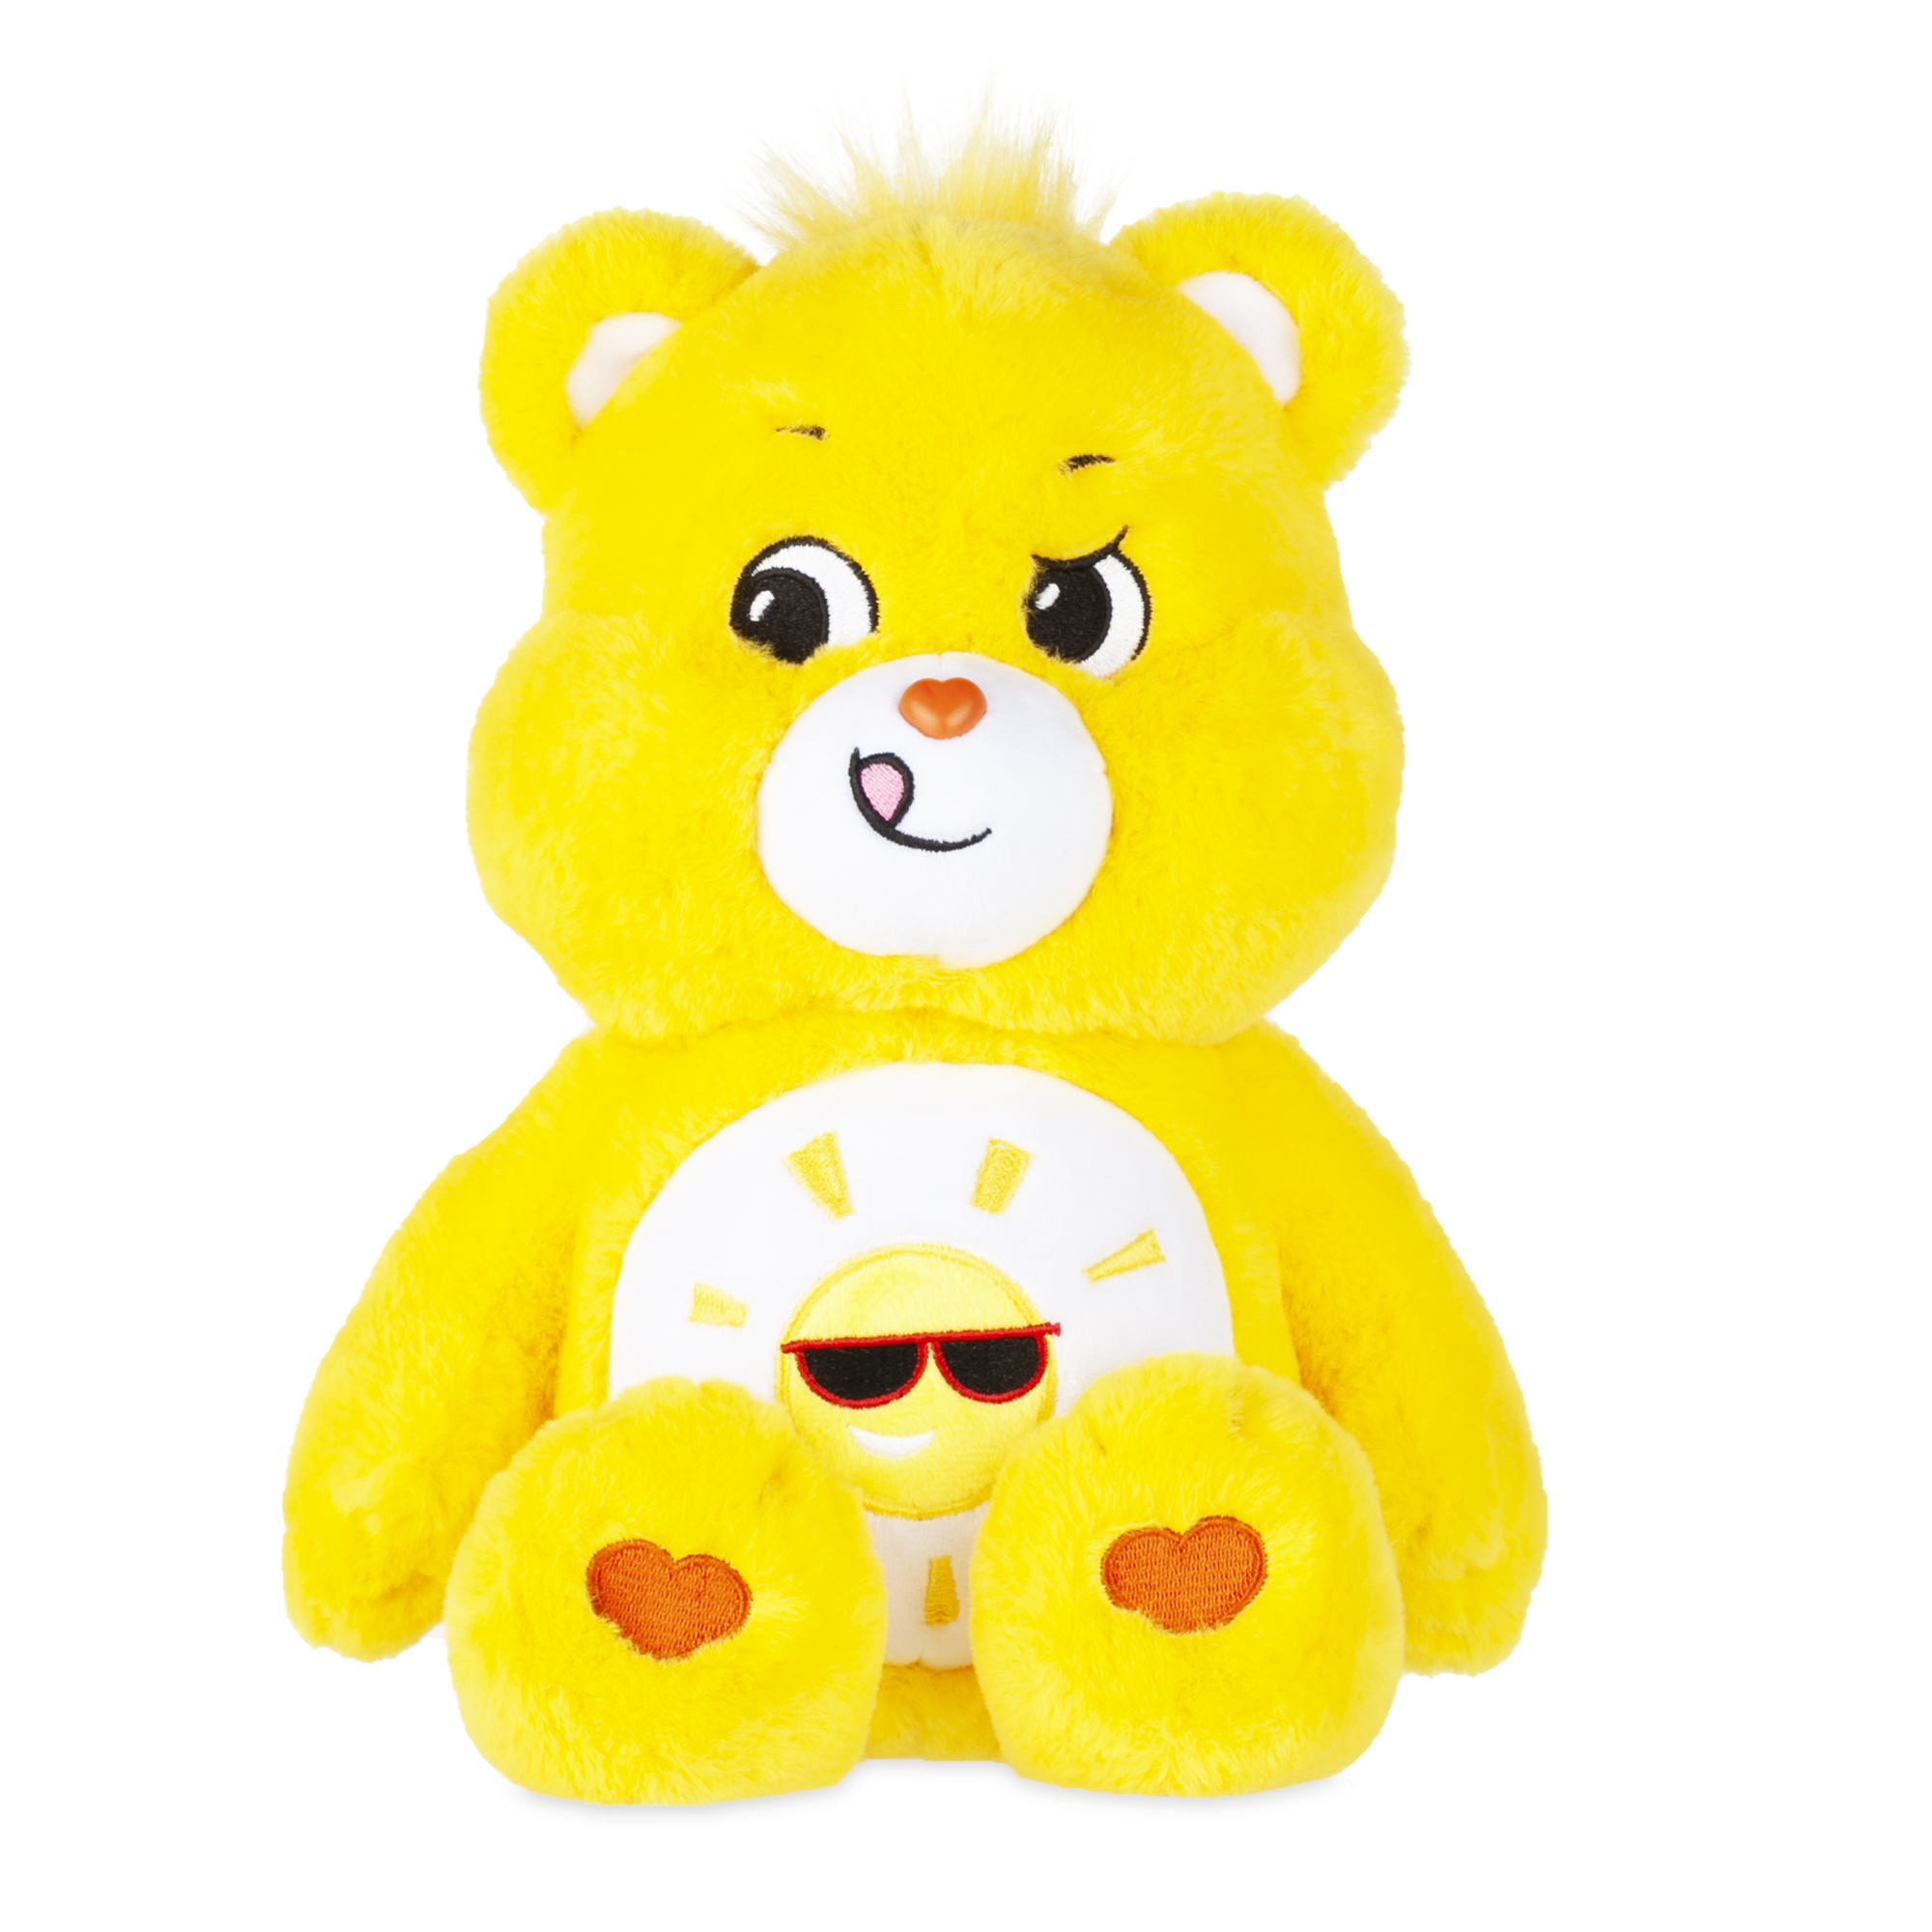 Care Bears 22086 14" Medium Plush Wish Bear for sale online 